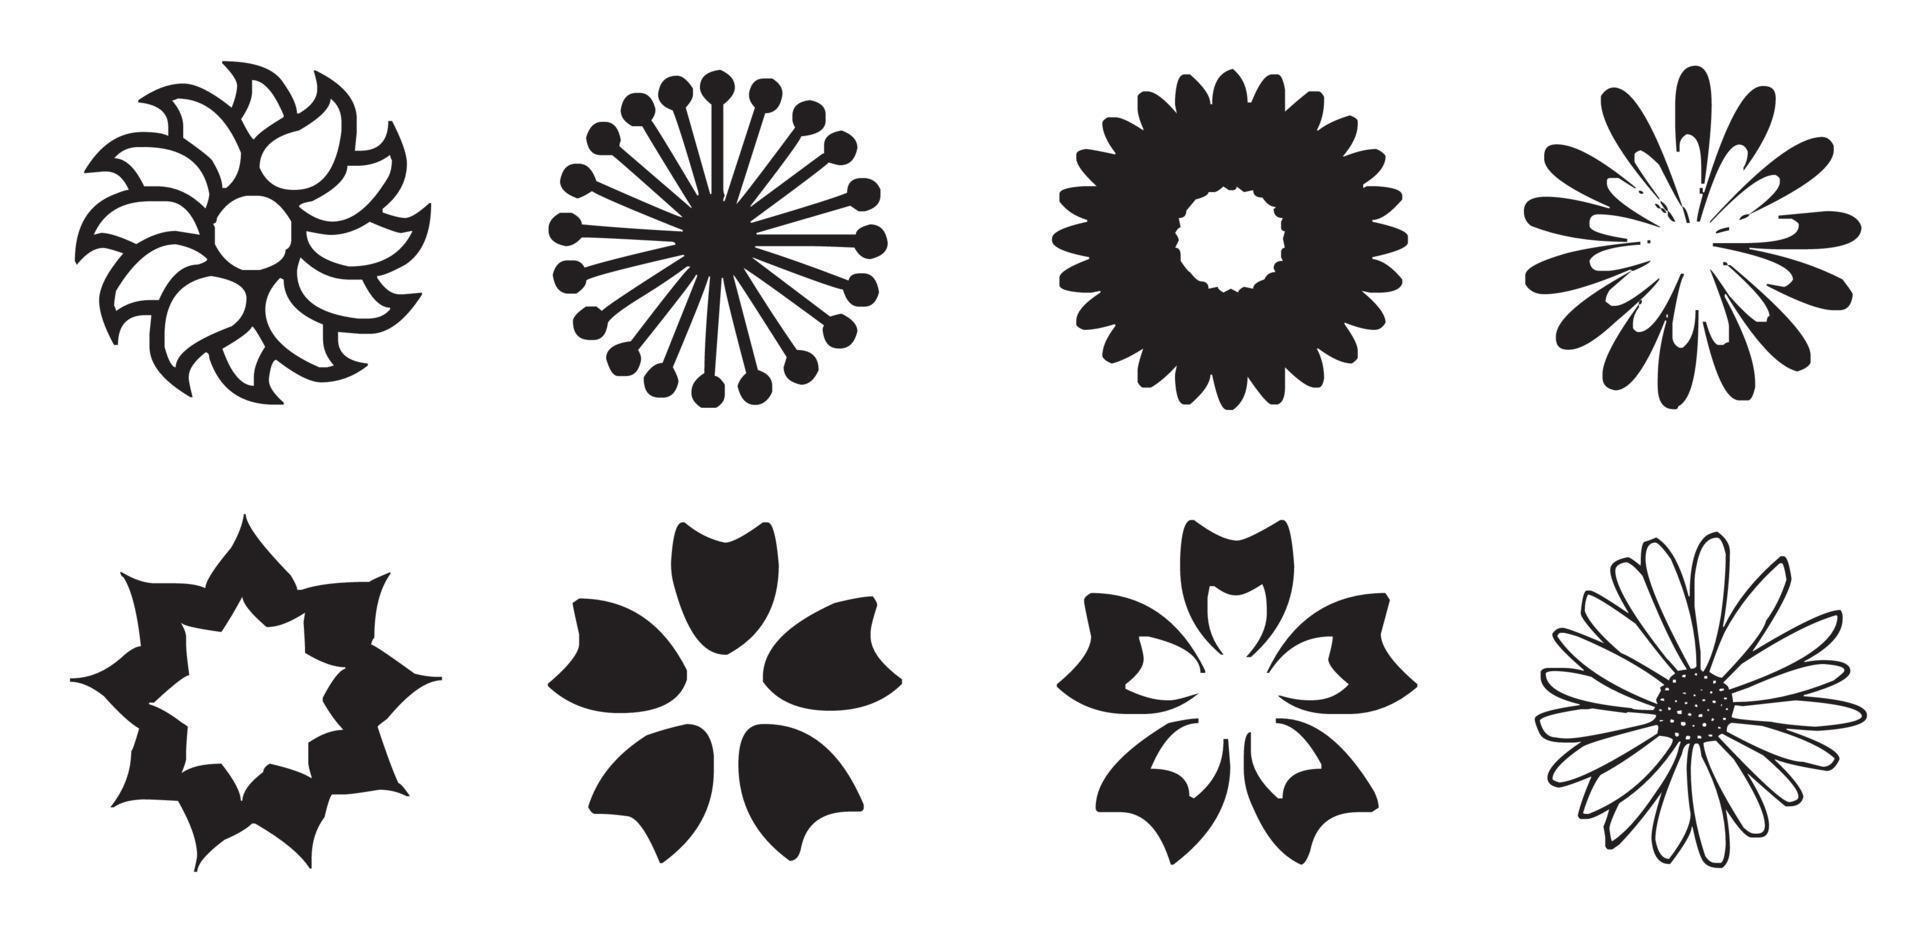 Flower icon set on white background. Vector illustration.